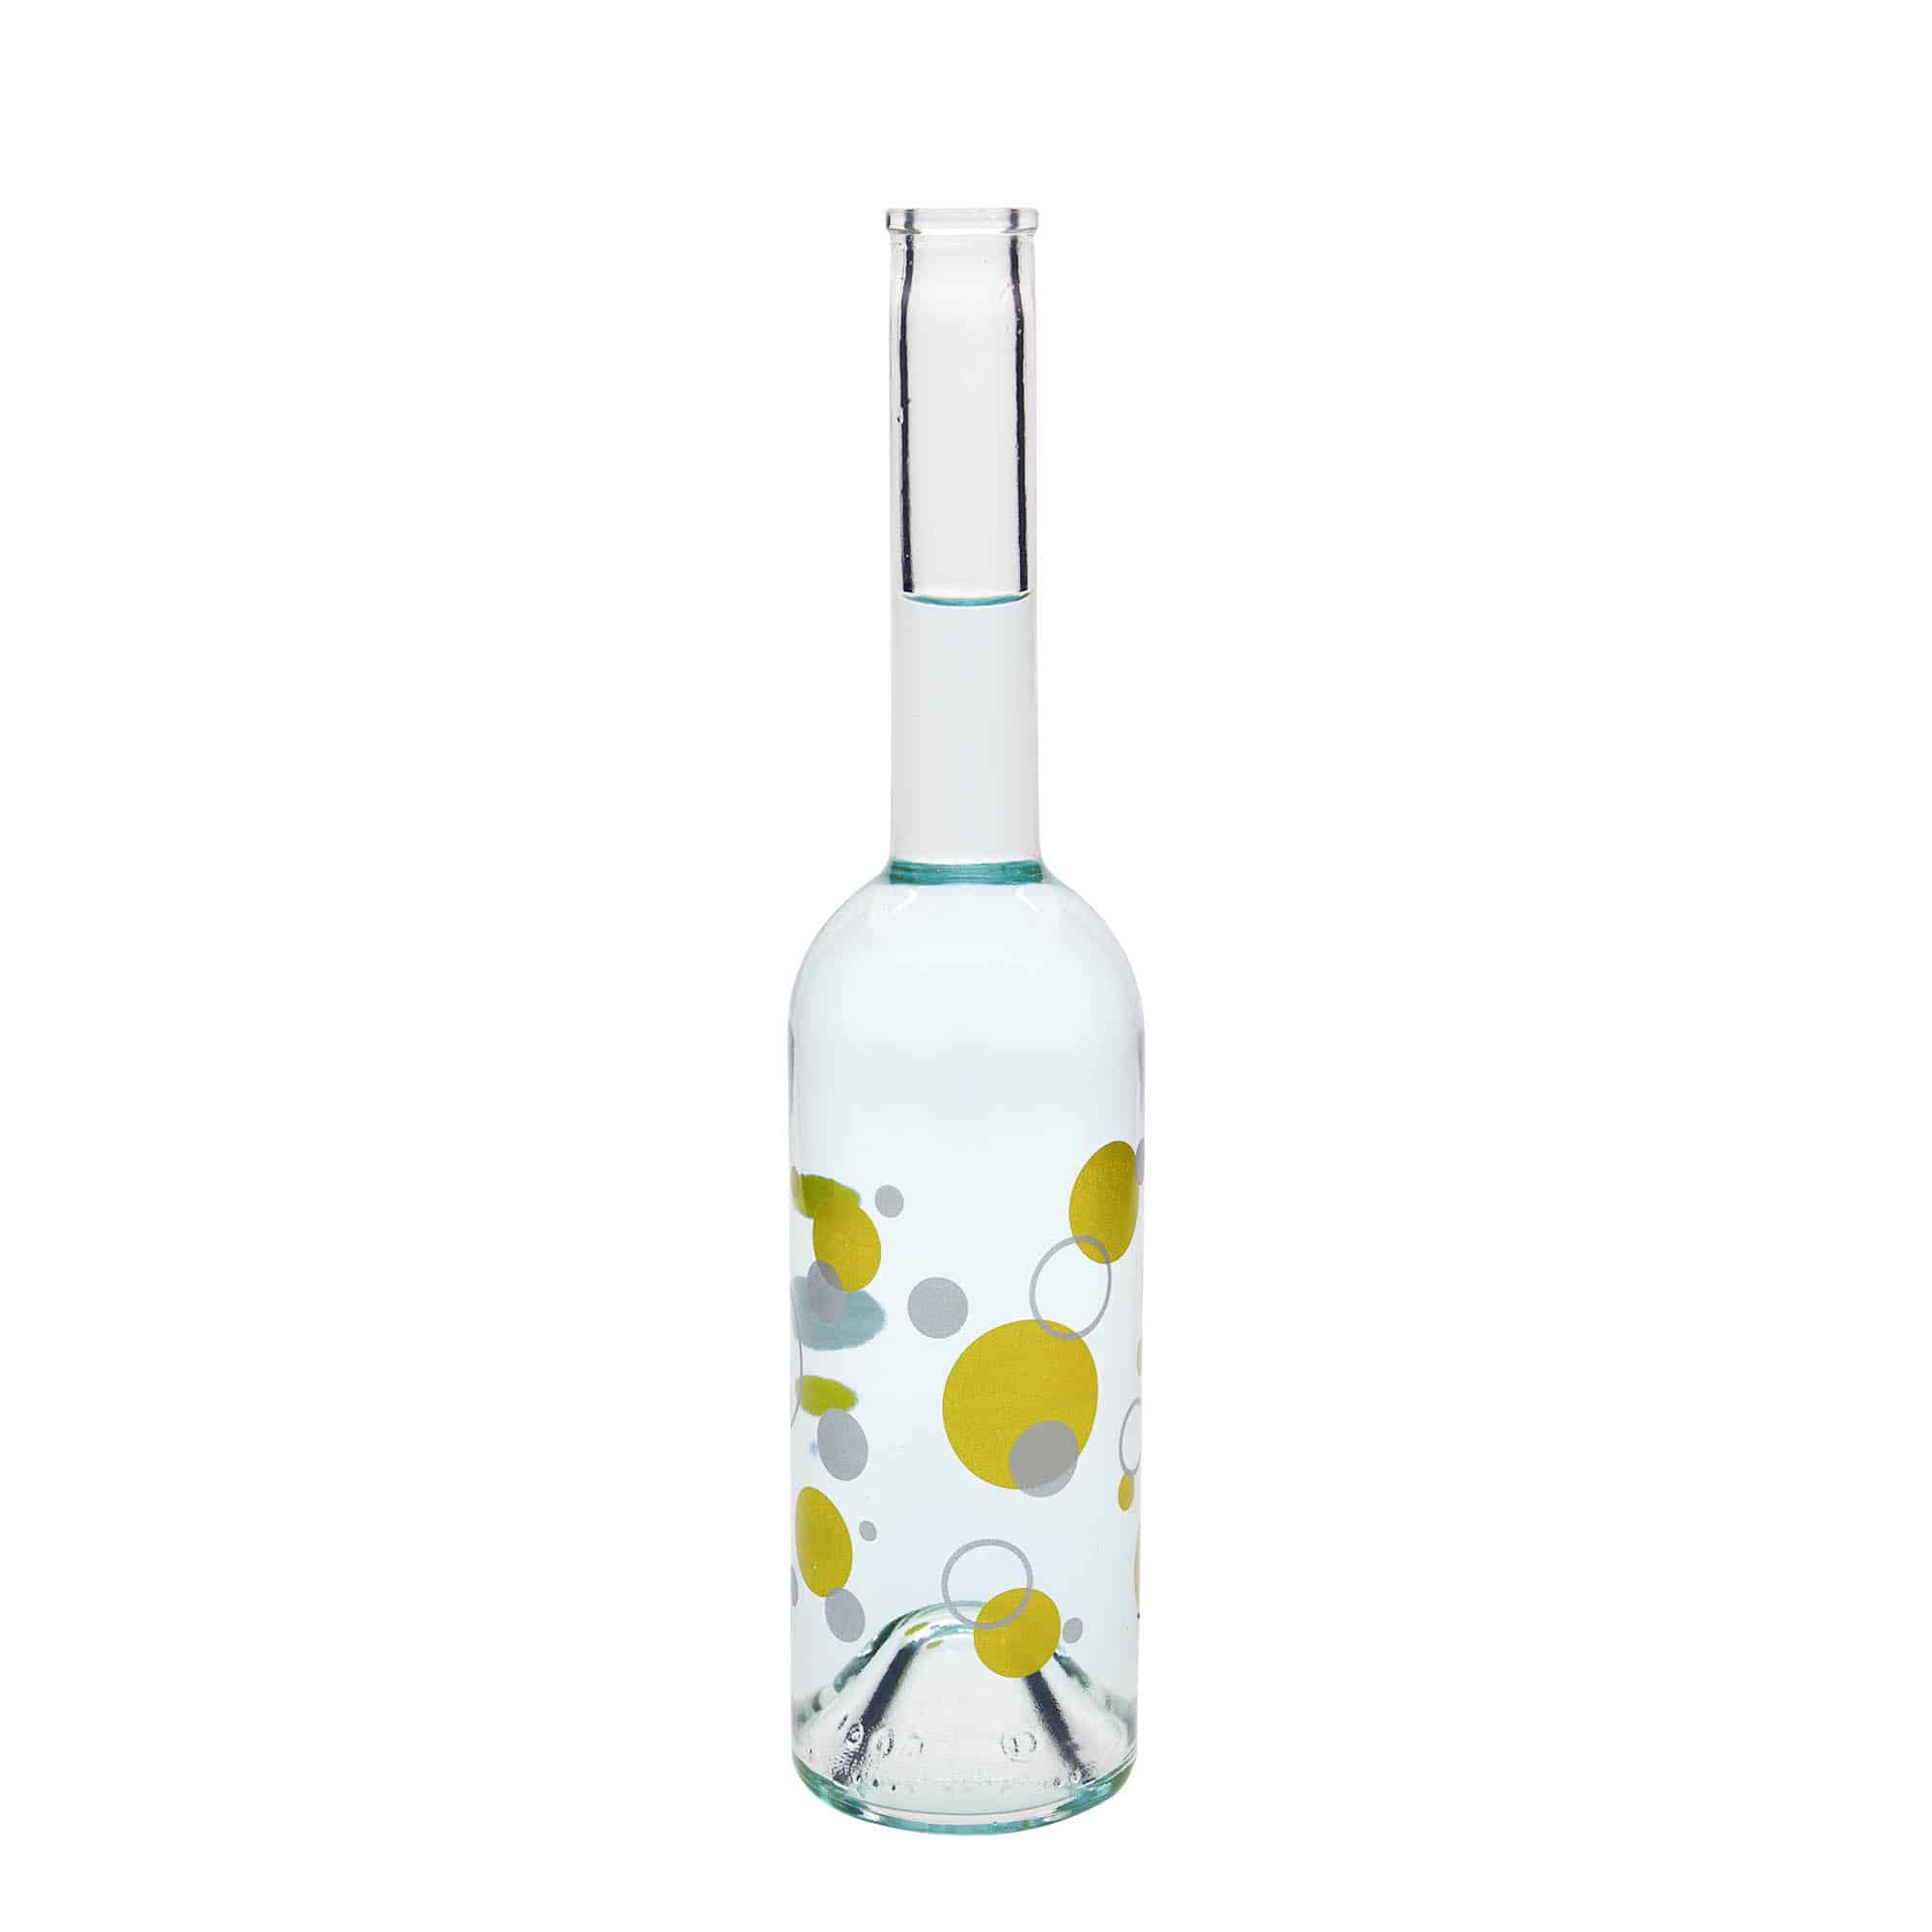 500 ml glass bottle 'Opera', print: dots, closure: cork